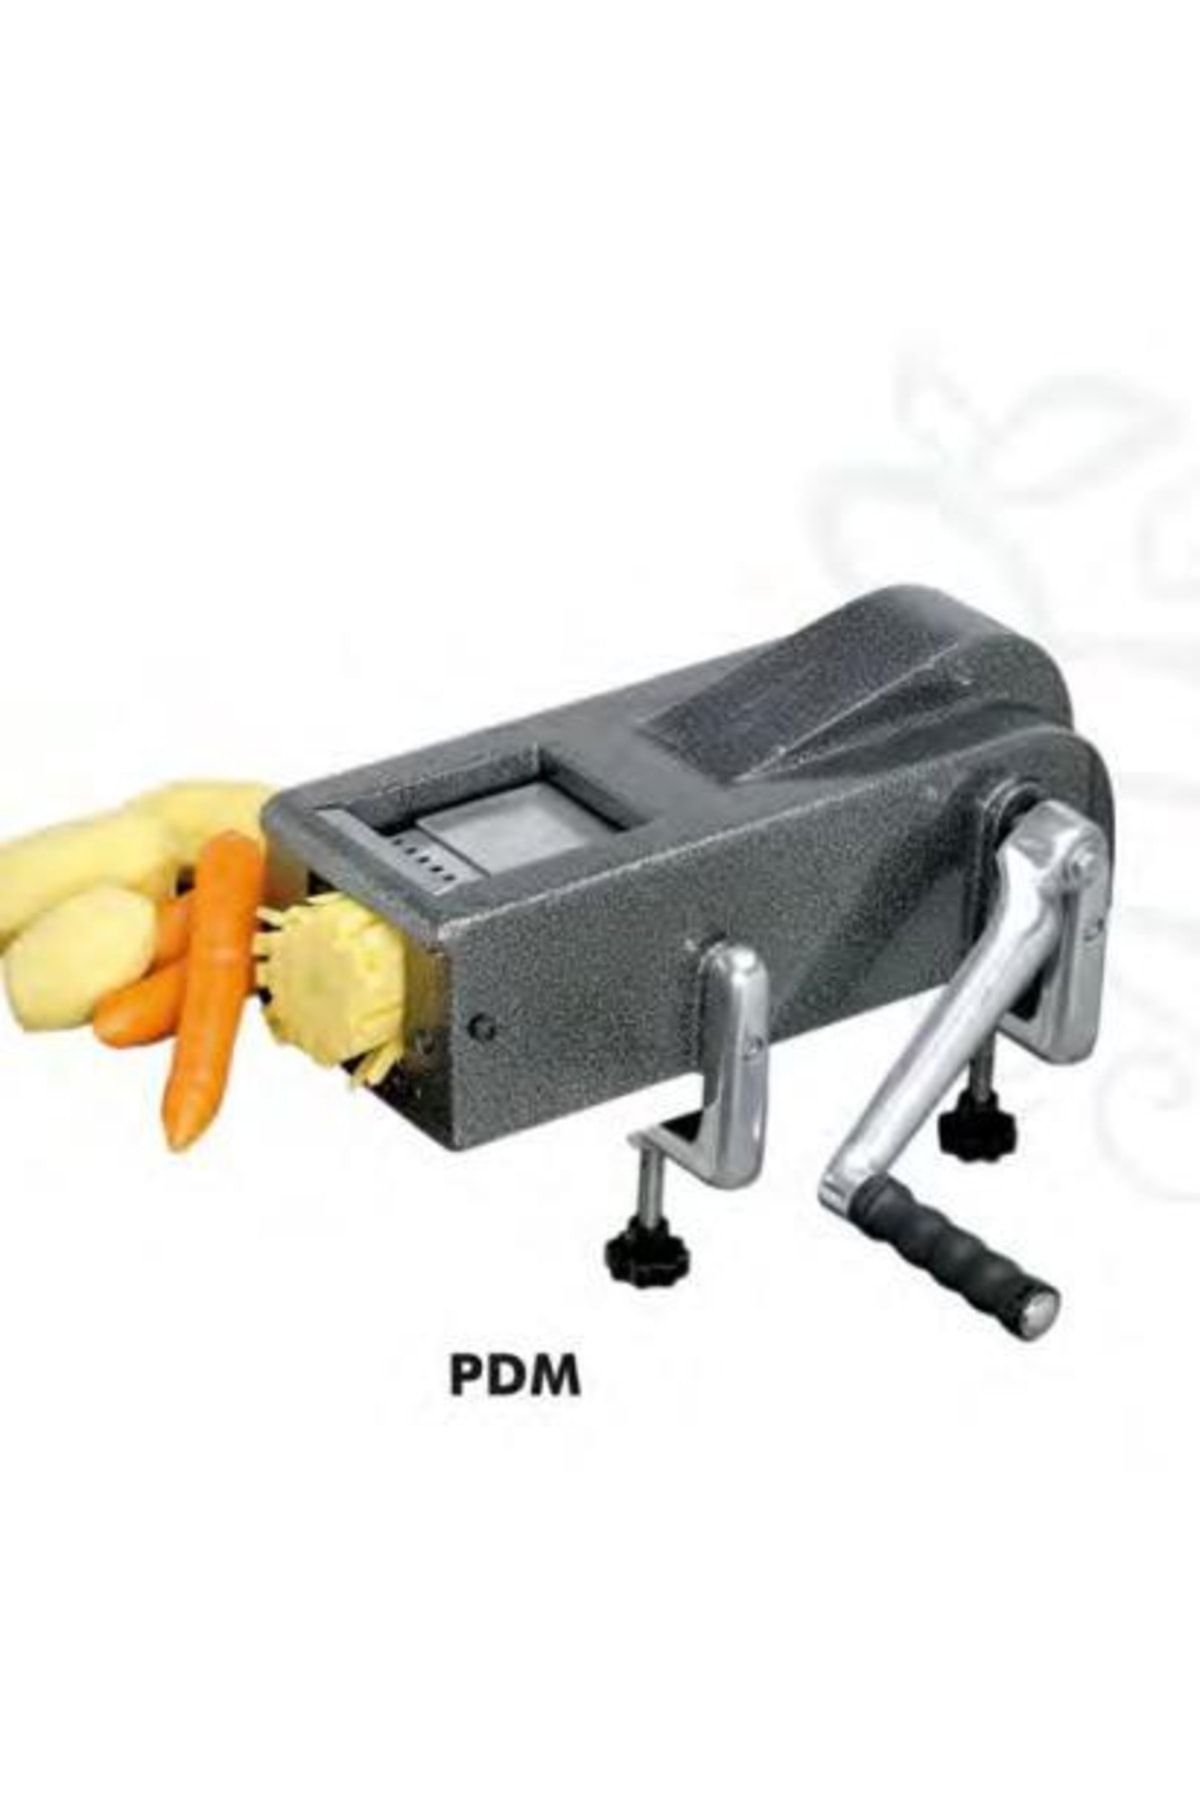 Boğaziçi Pdm Patates Dilimleme Makinası